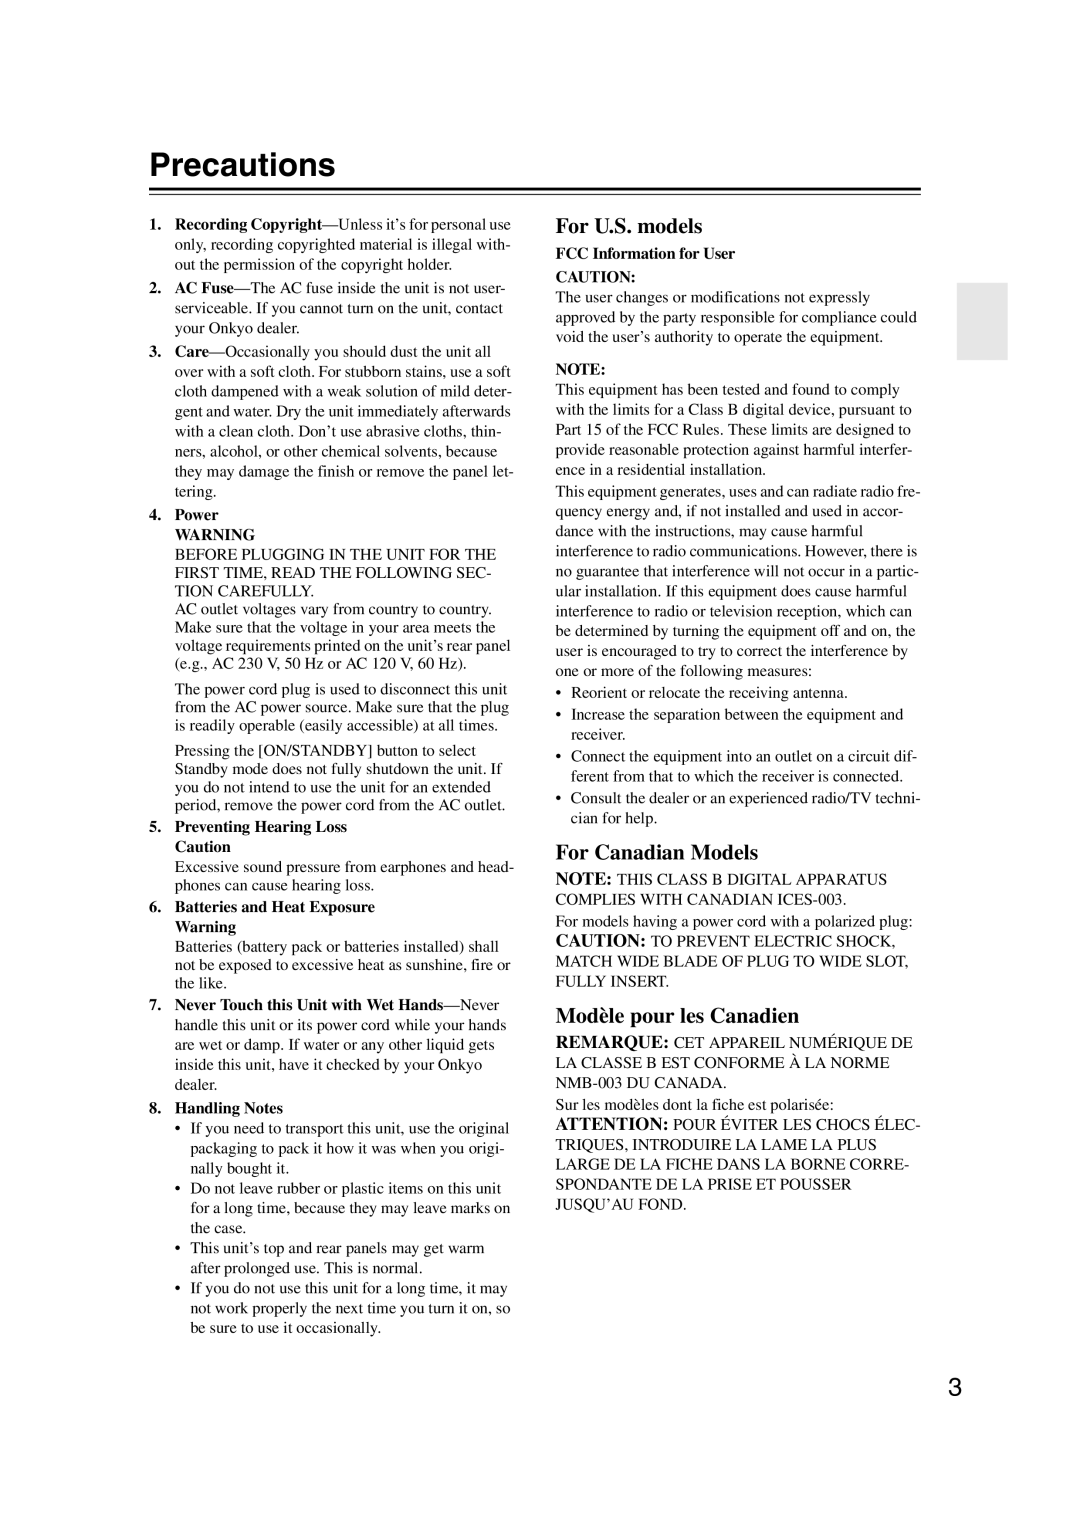 Onkyo HT-RC160 Precautions, For U.S. models, For Canadian Models, Modèle pour les Canadien, Power, Handling Notes 